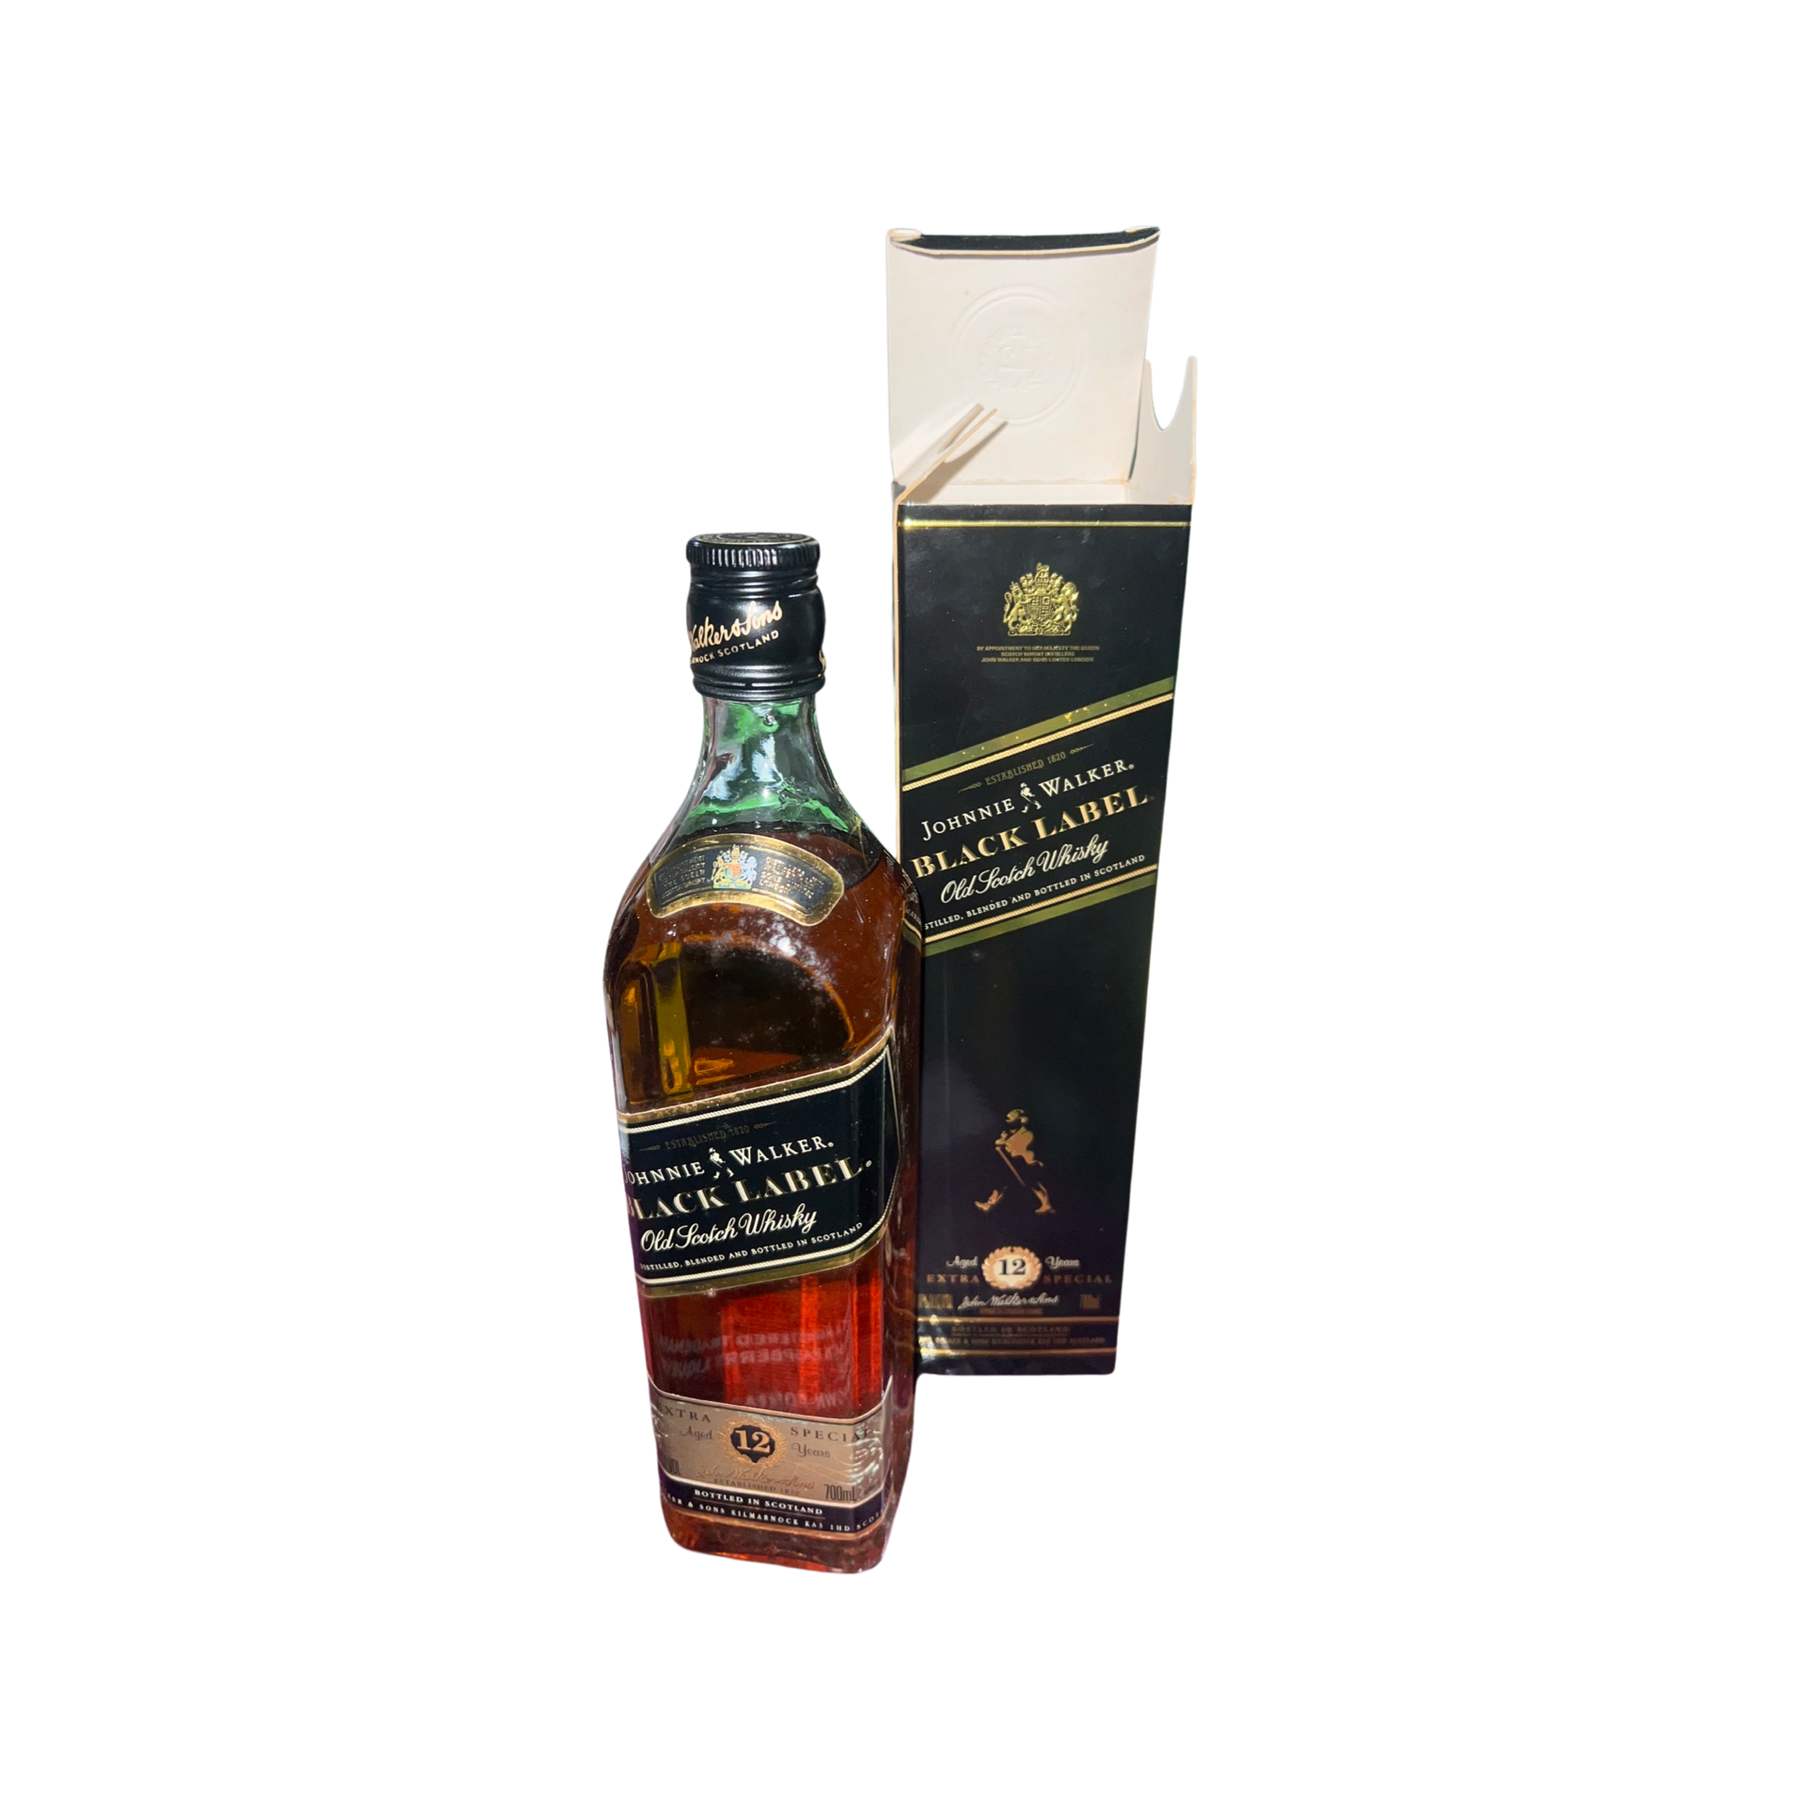 Johnnie Walker 12YO Black Label Extra Special (1980s) Old Scotch Whisky 700ml